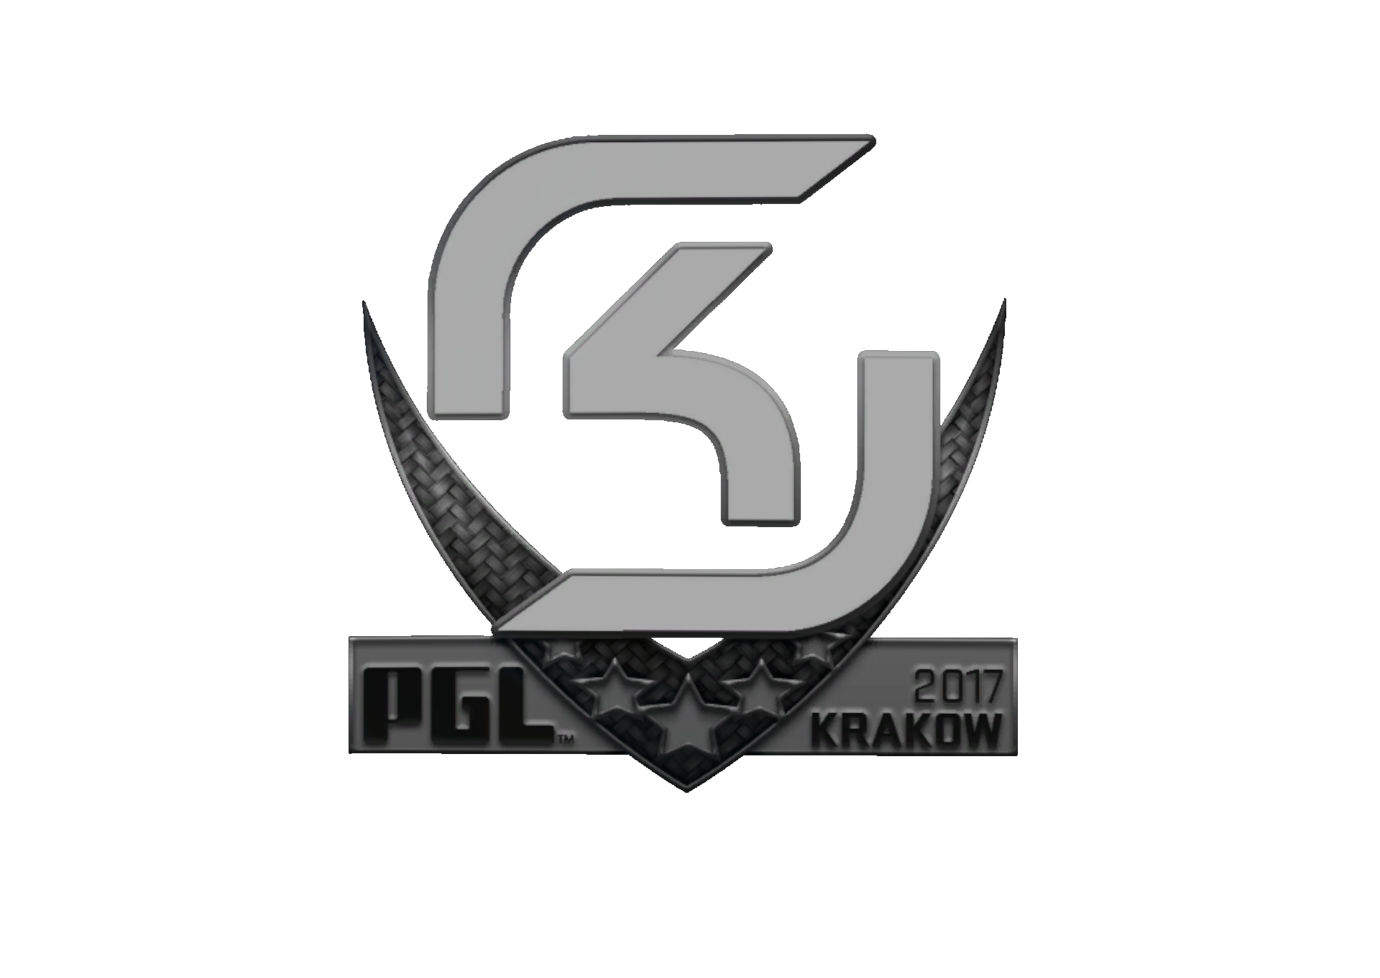 Наклейки краков. PGL Krakow 2017 наклейка. Краков 2017 наклейка.